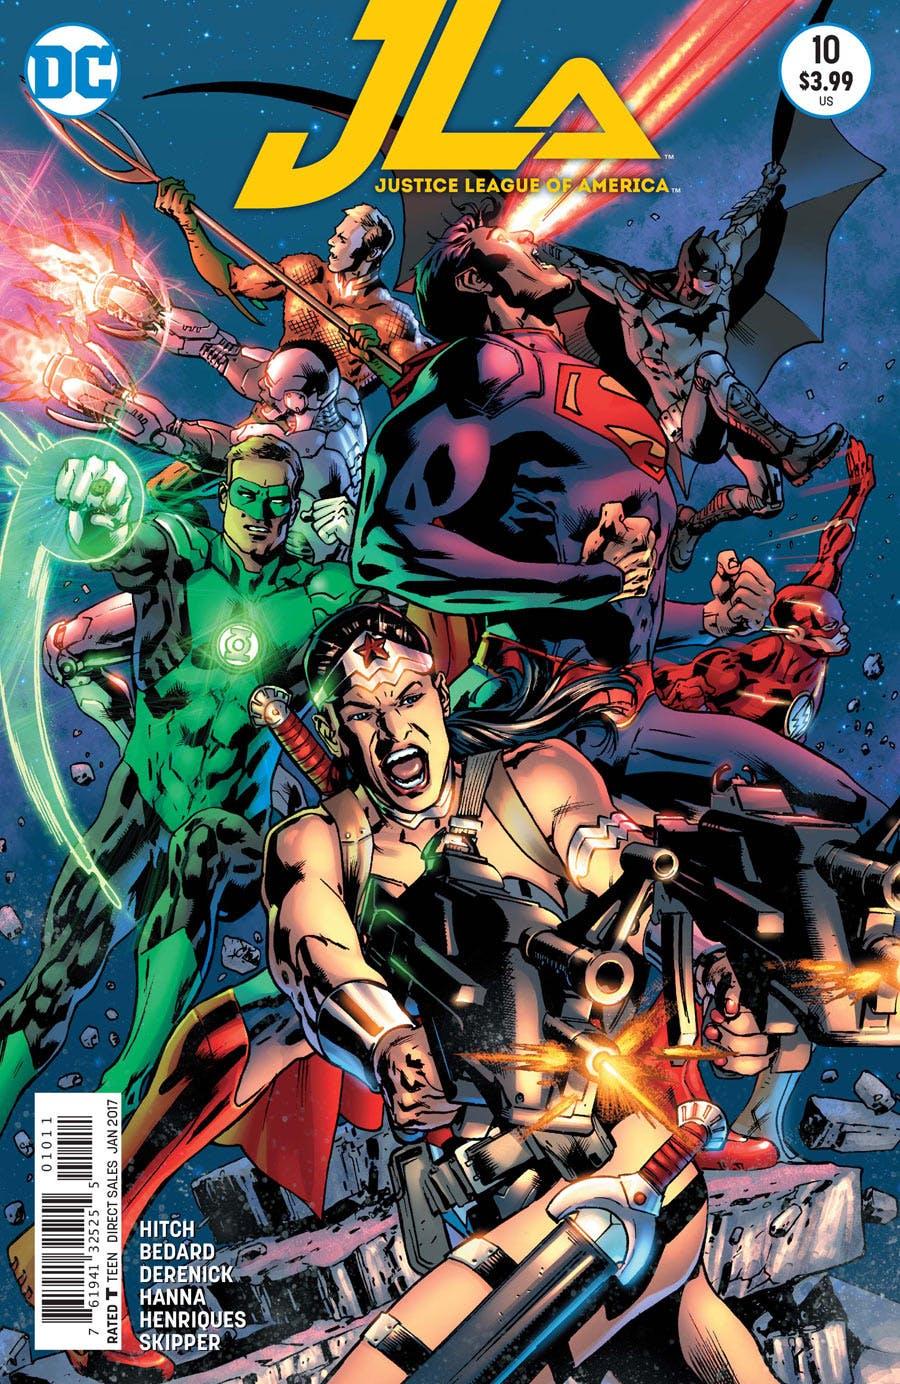 Justice League of America Vol. 4 #10